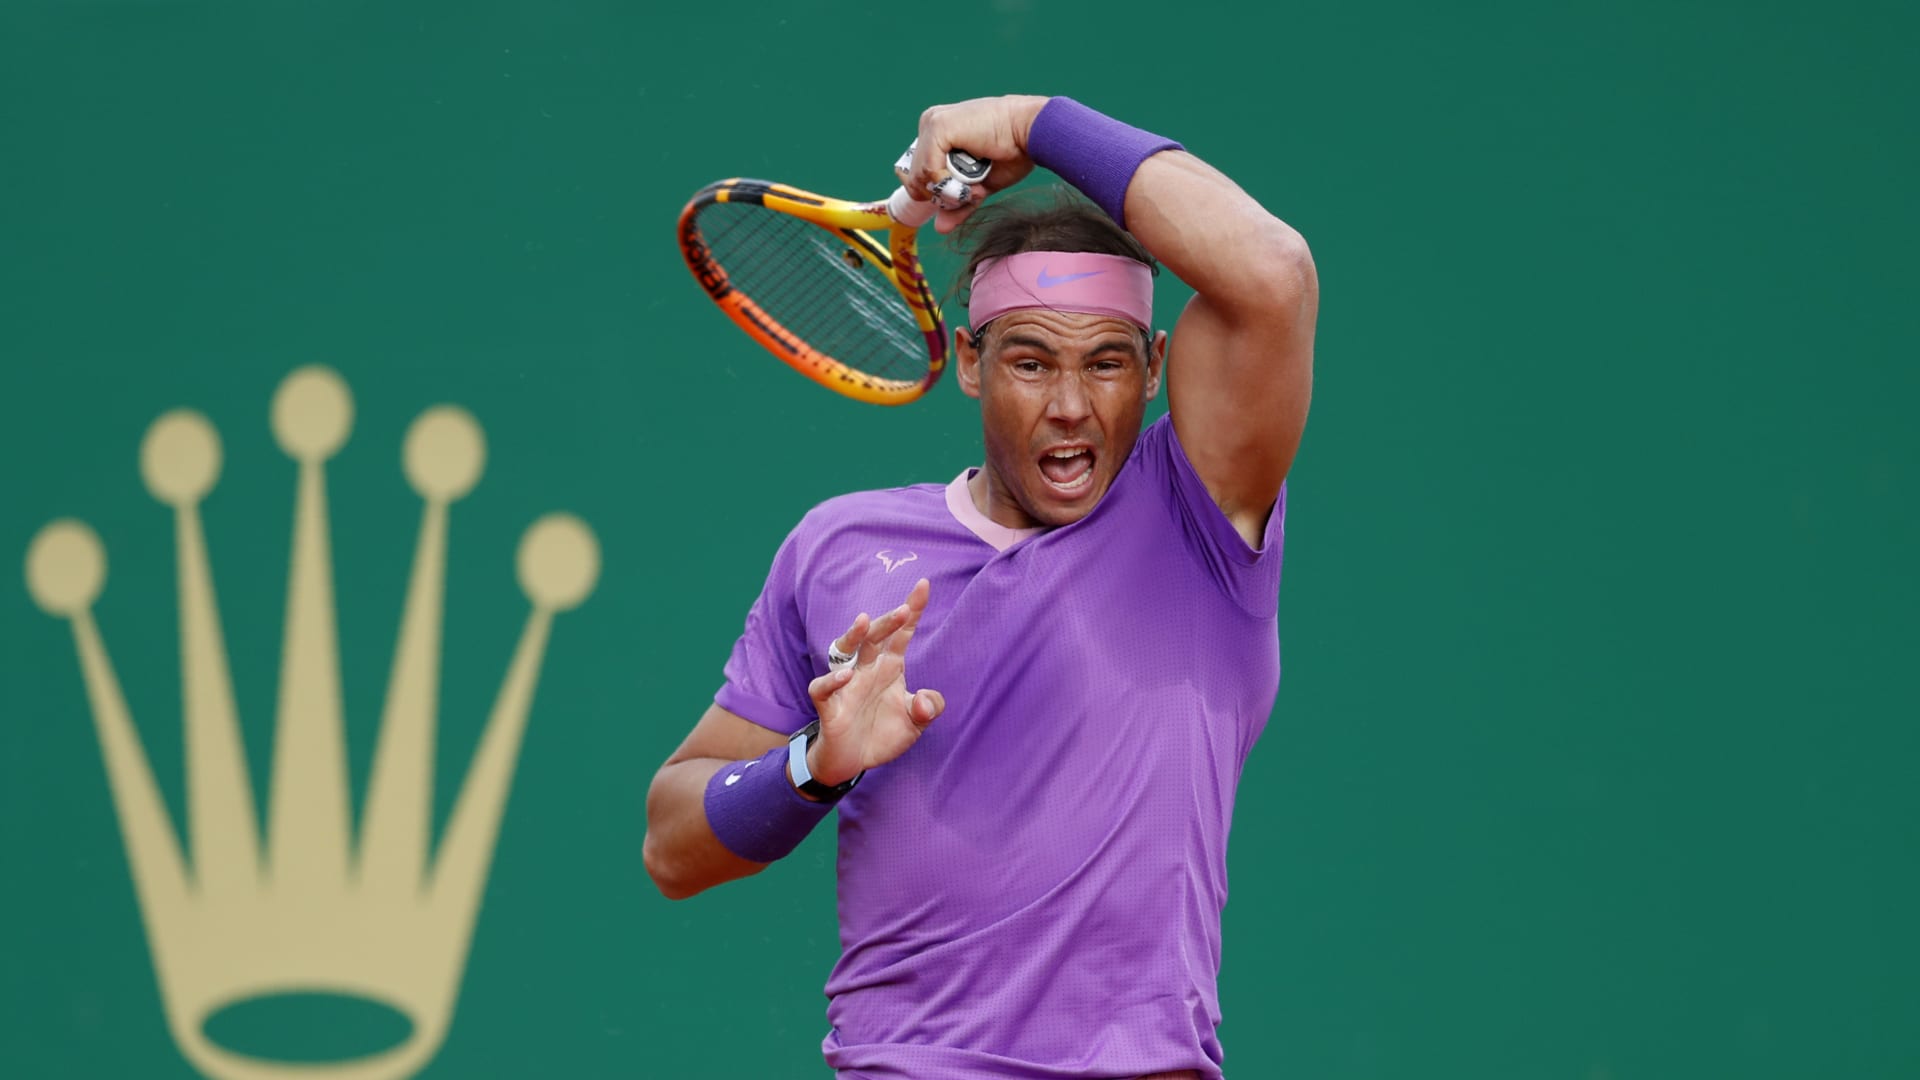 Rafael Nadal, Carlos Alcaraz pull out of Monte Carlo Masters